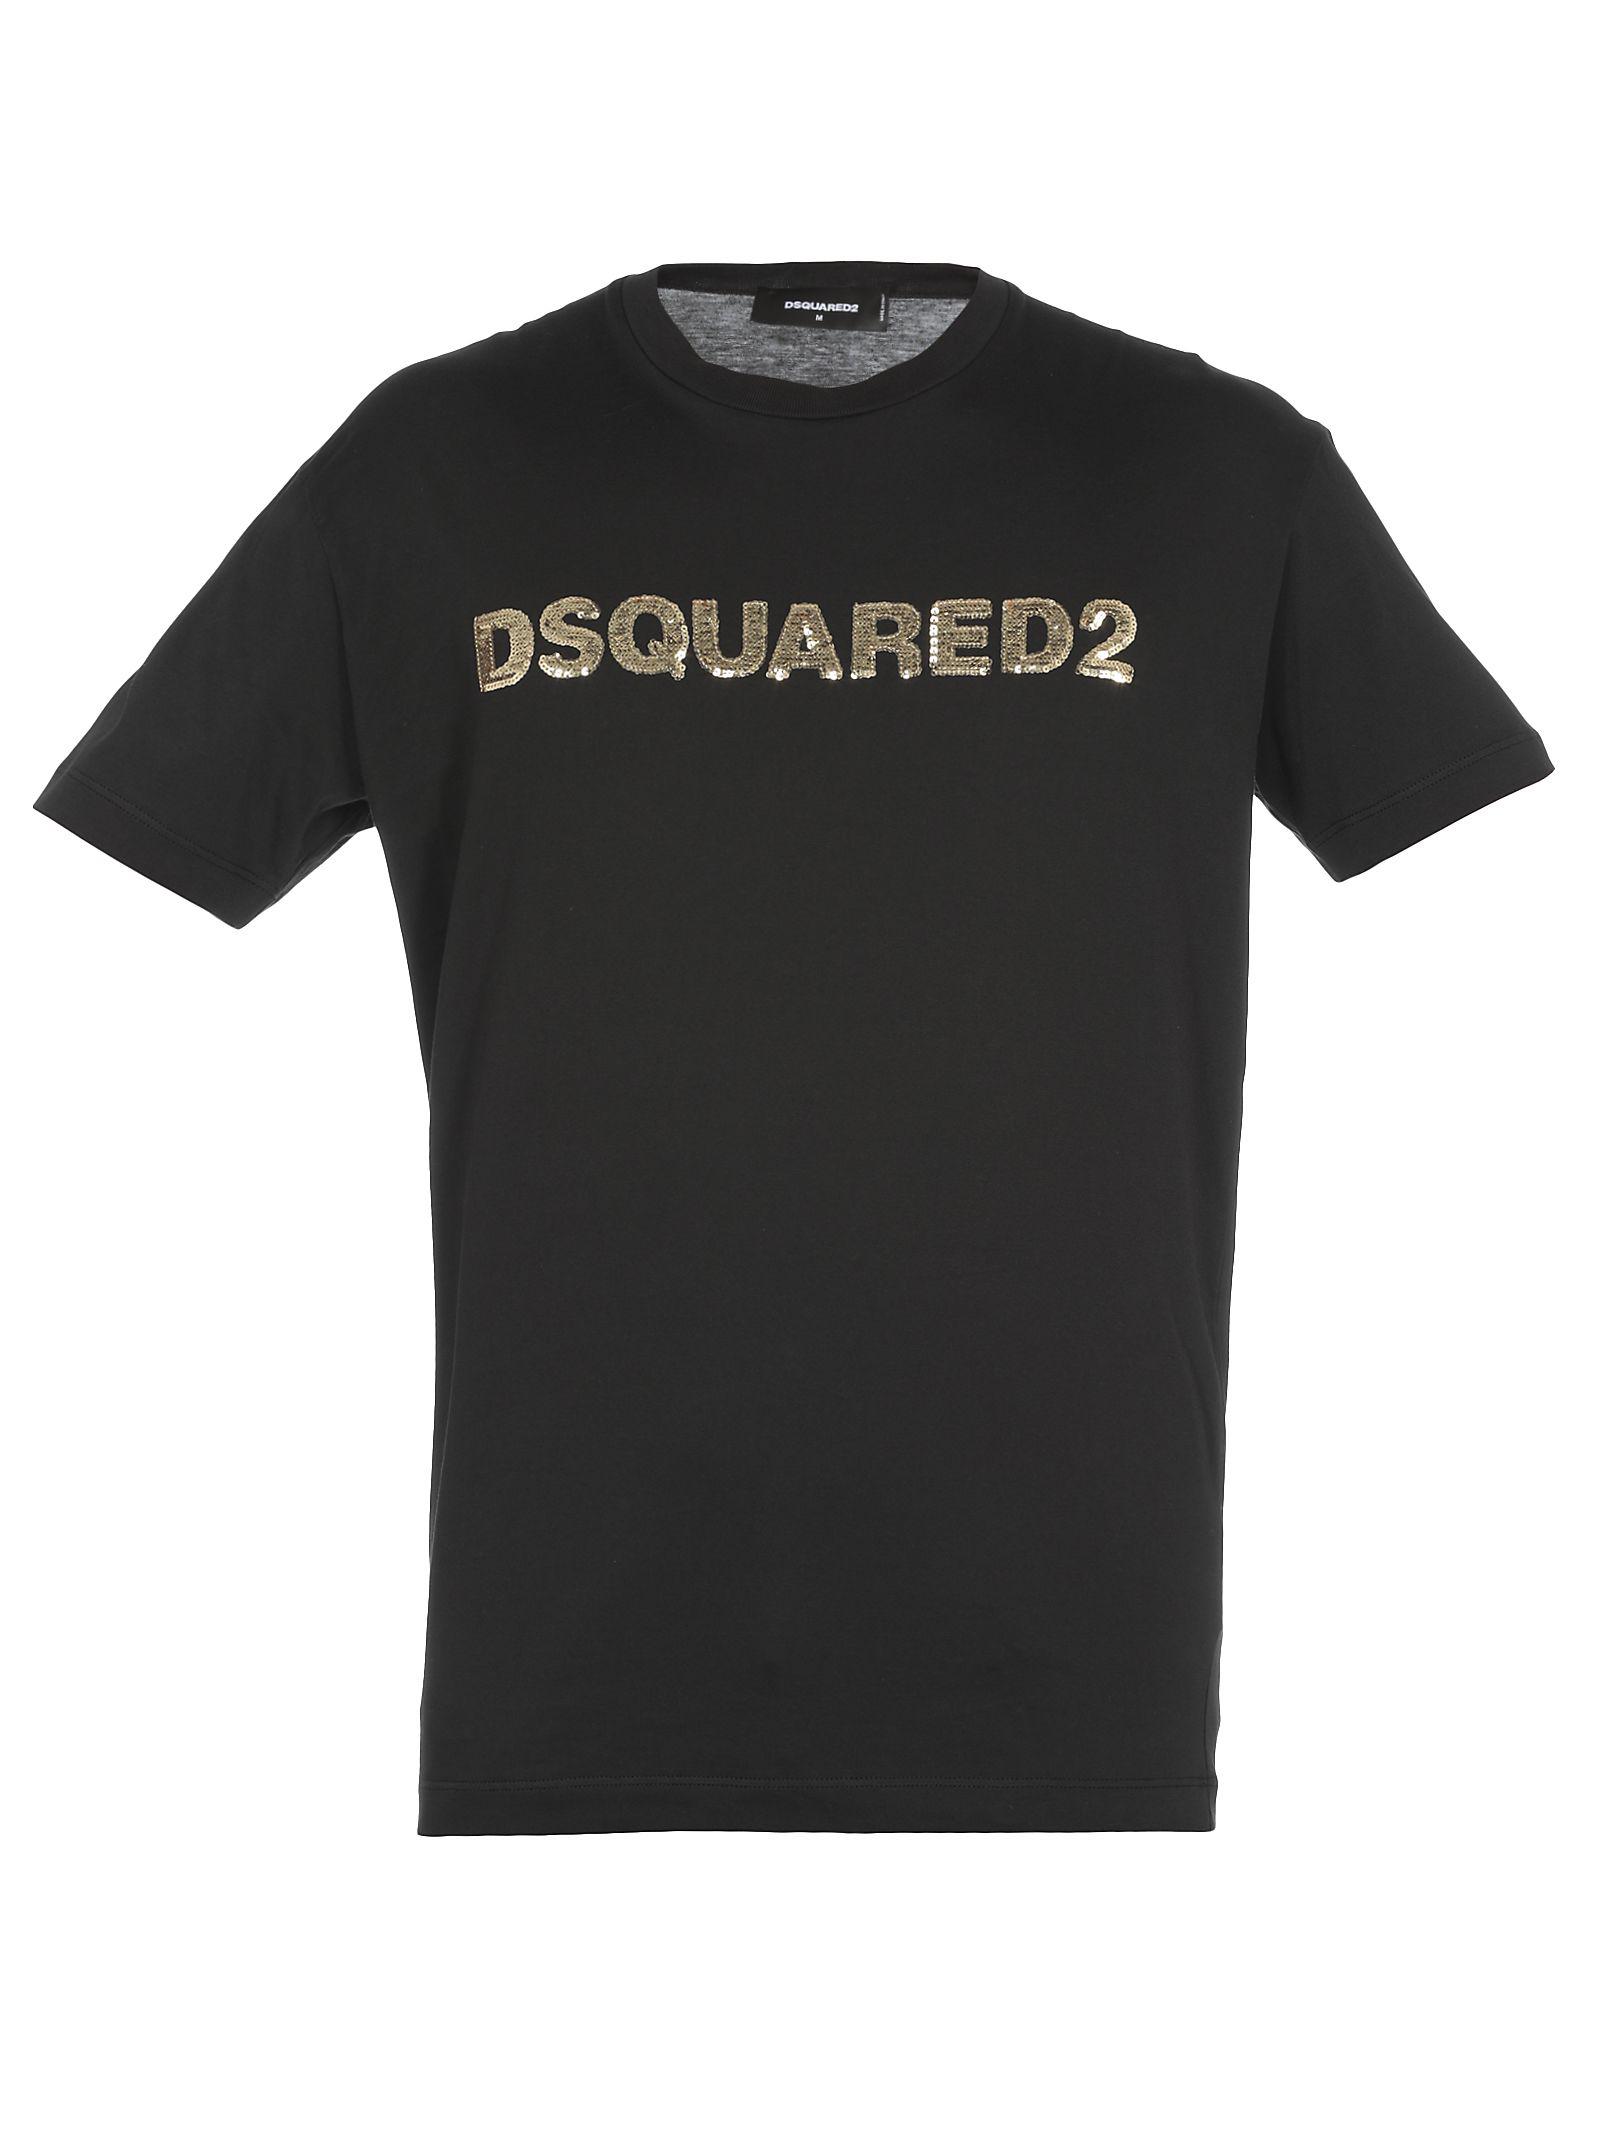 dsquared2 gold t shirt